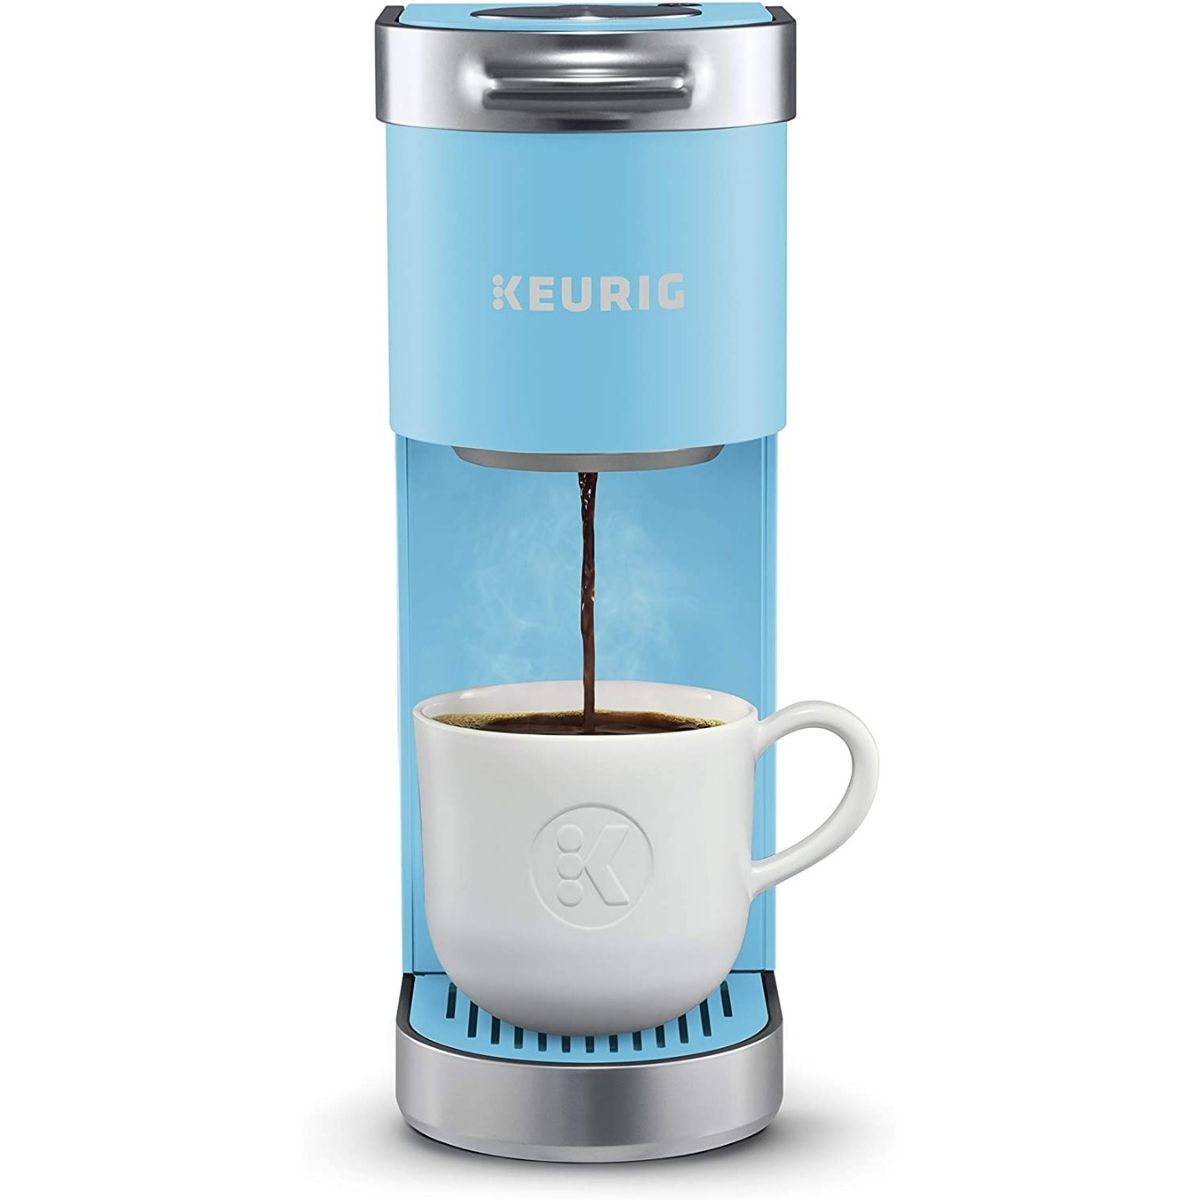 The Keurig Black Friday Option: Keurig K-Mini Plus Coffee Maker